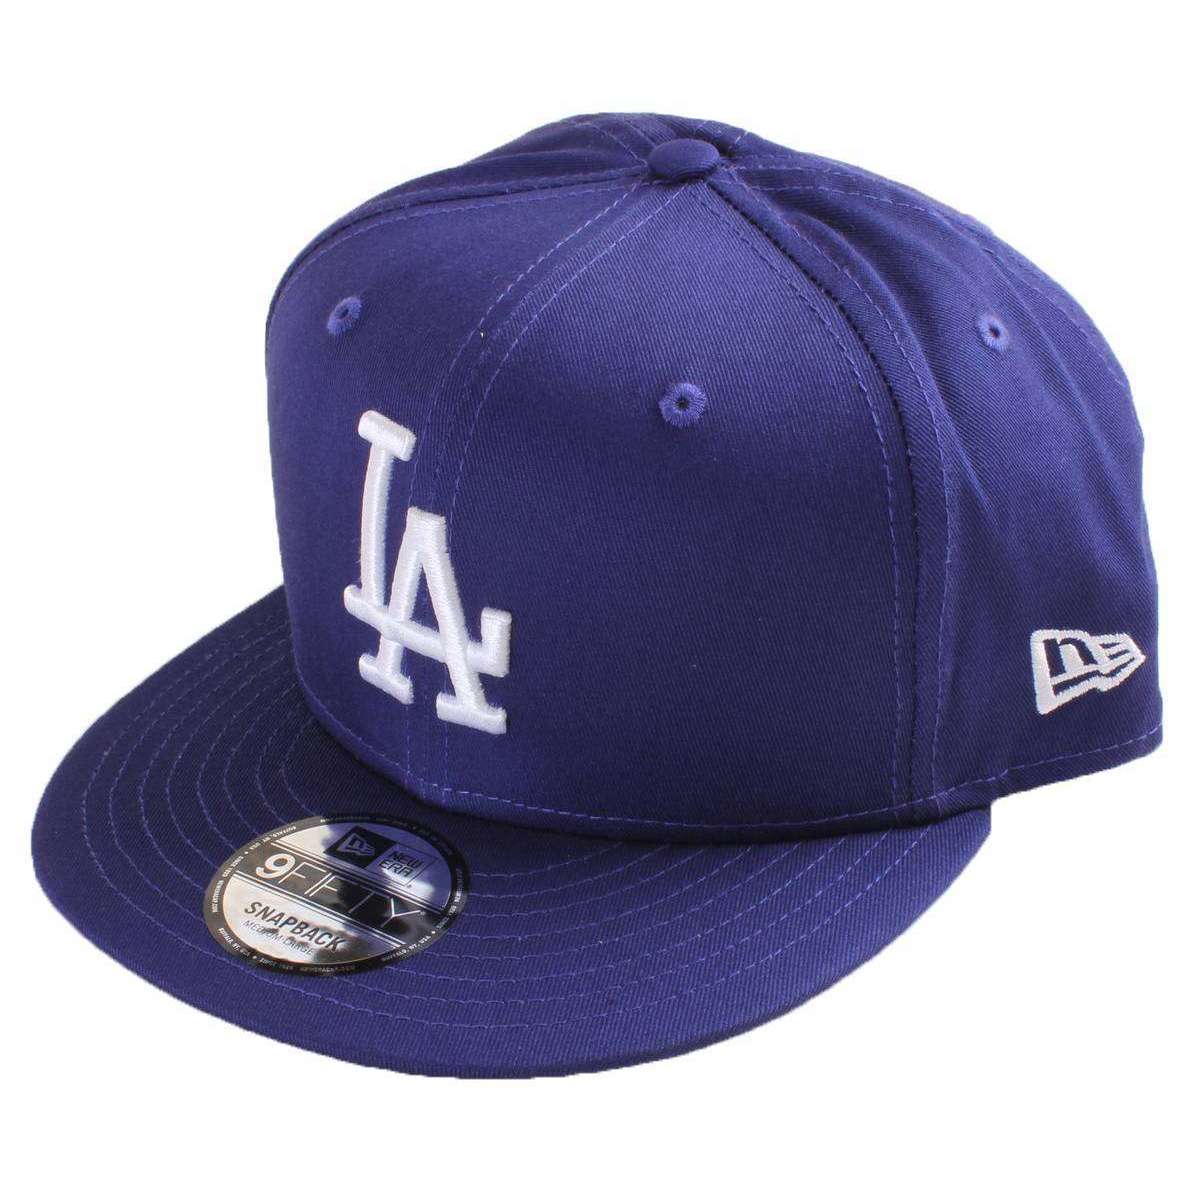 New Era MLB 9FIFTY Los Angeles Dodgers Snapback - Blue